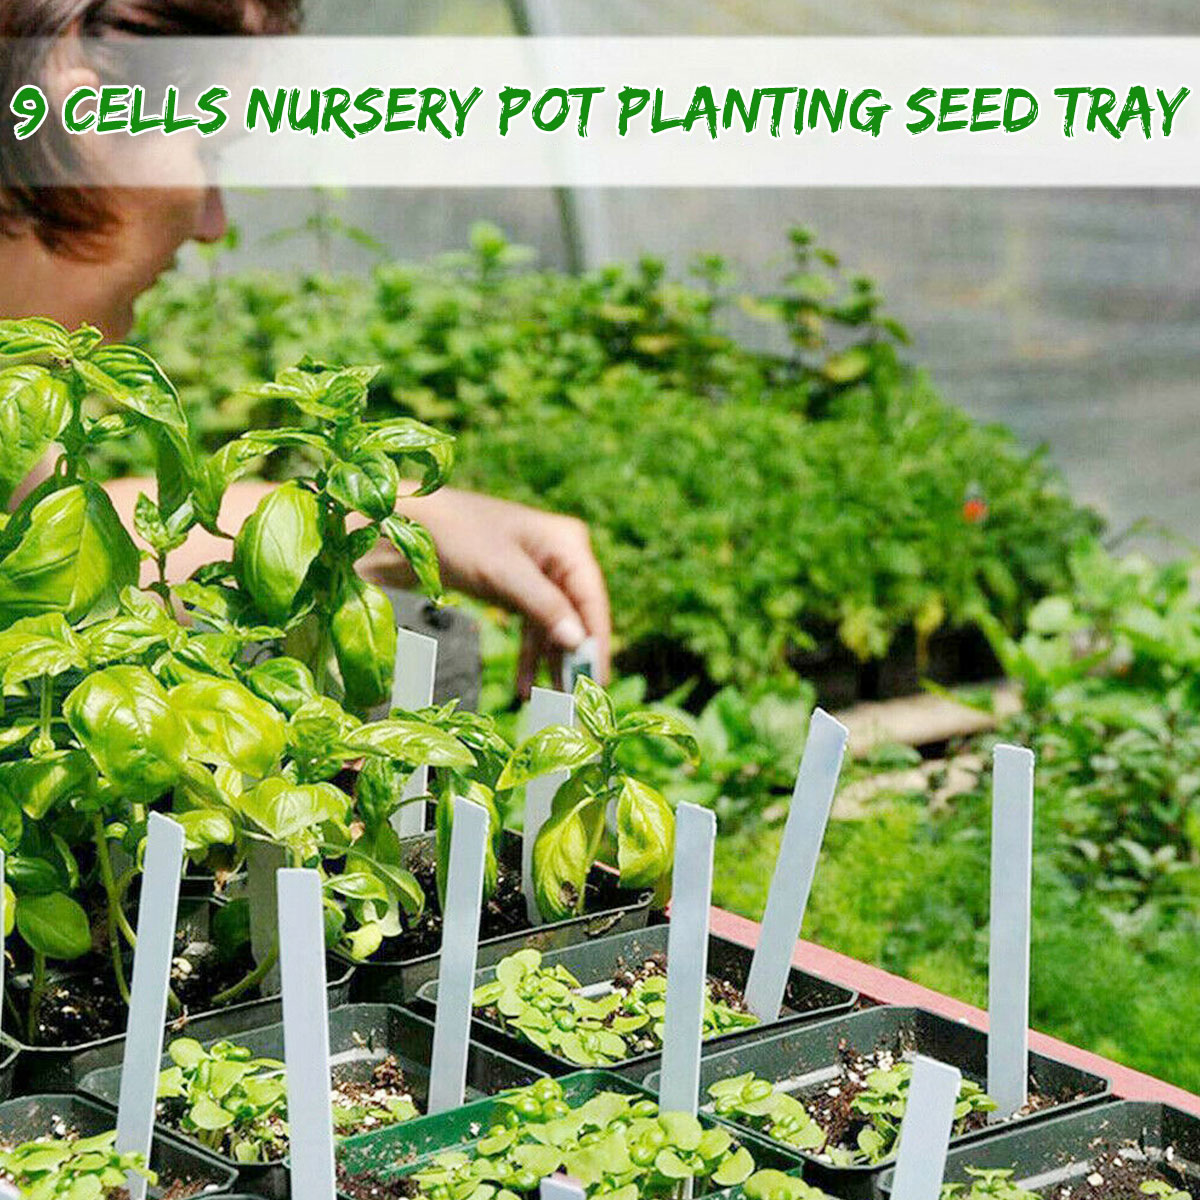 9 Holes Plastic Planting Box Set Nursery Pot Plant Grow Garden Germination Kit